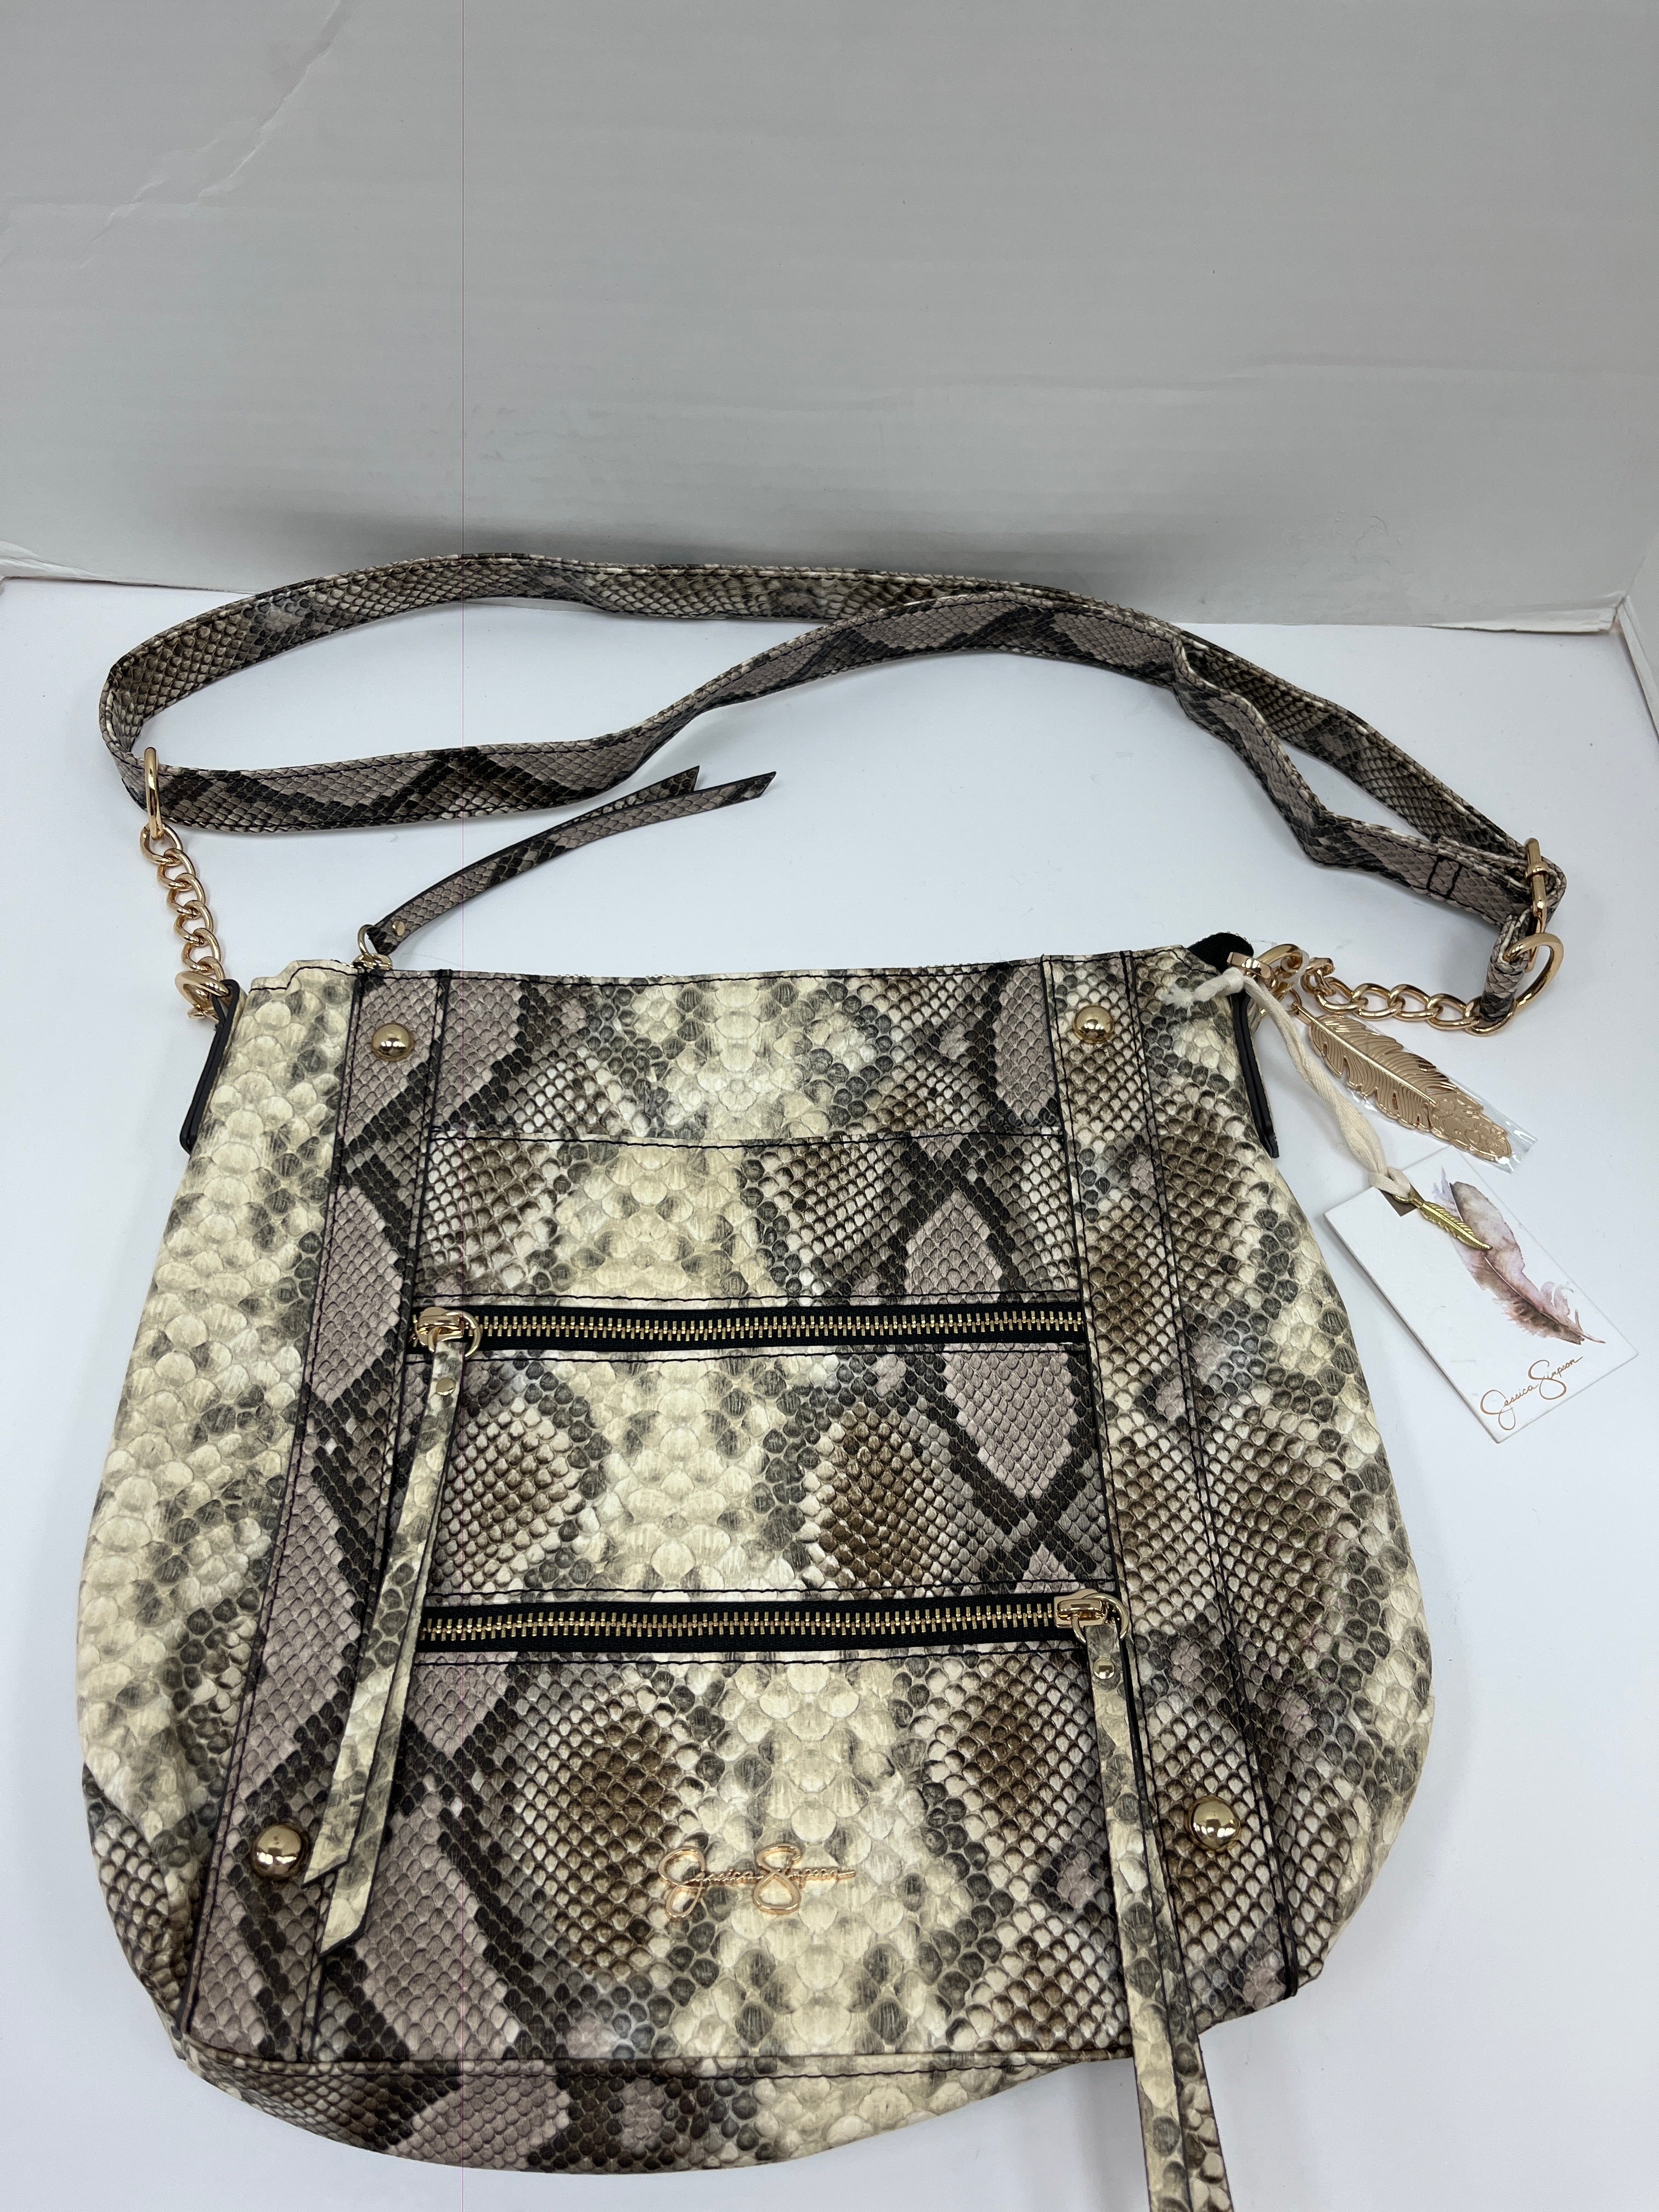 Jessica Simpson Handbags in Handbags - Walmart.com